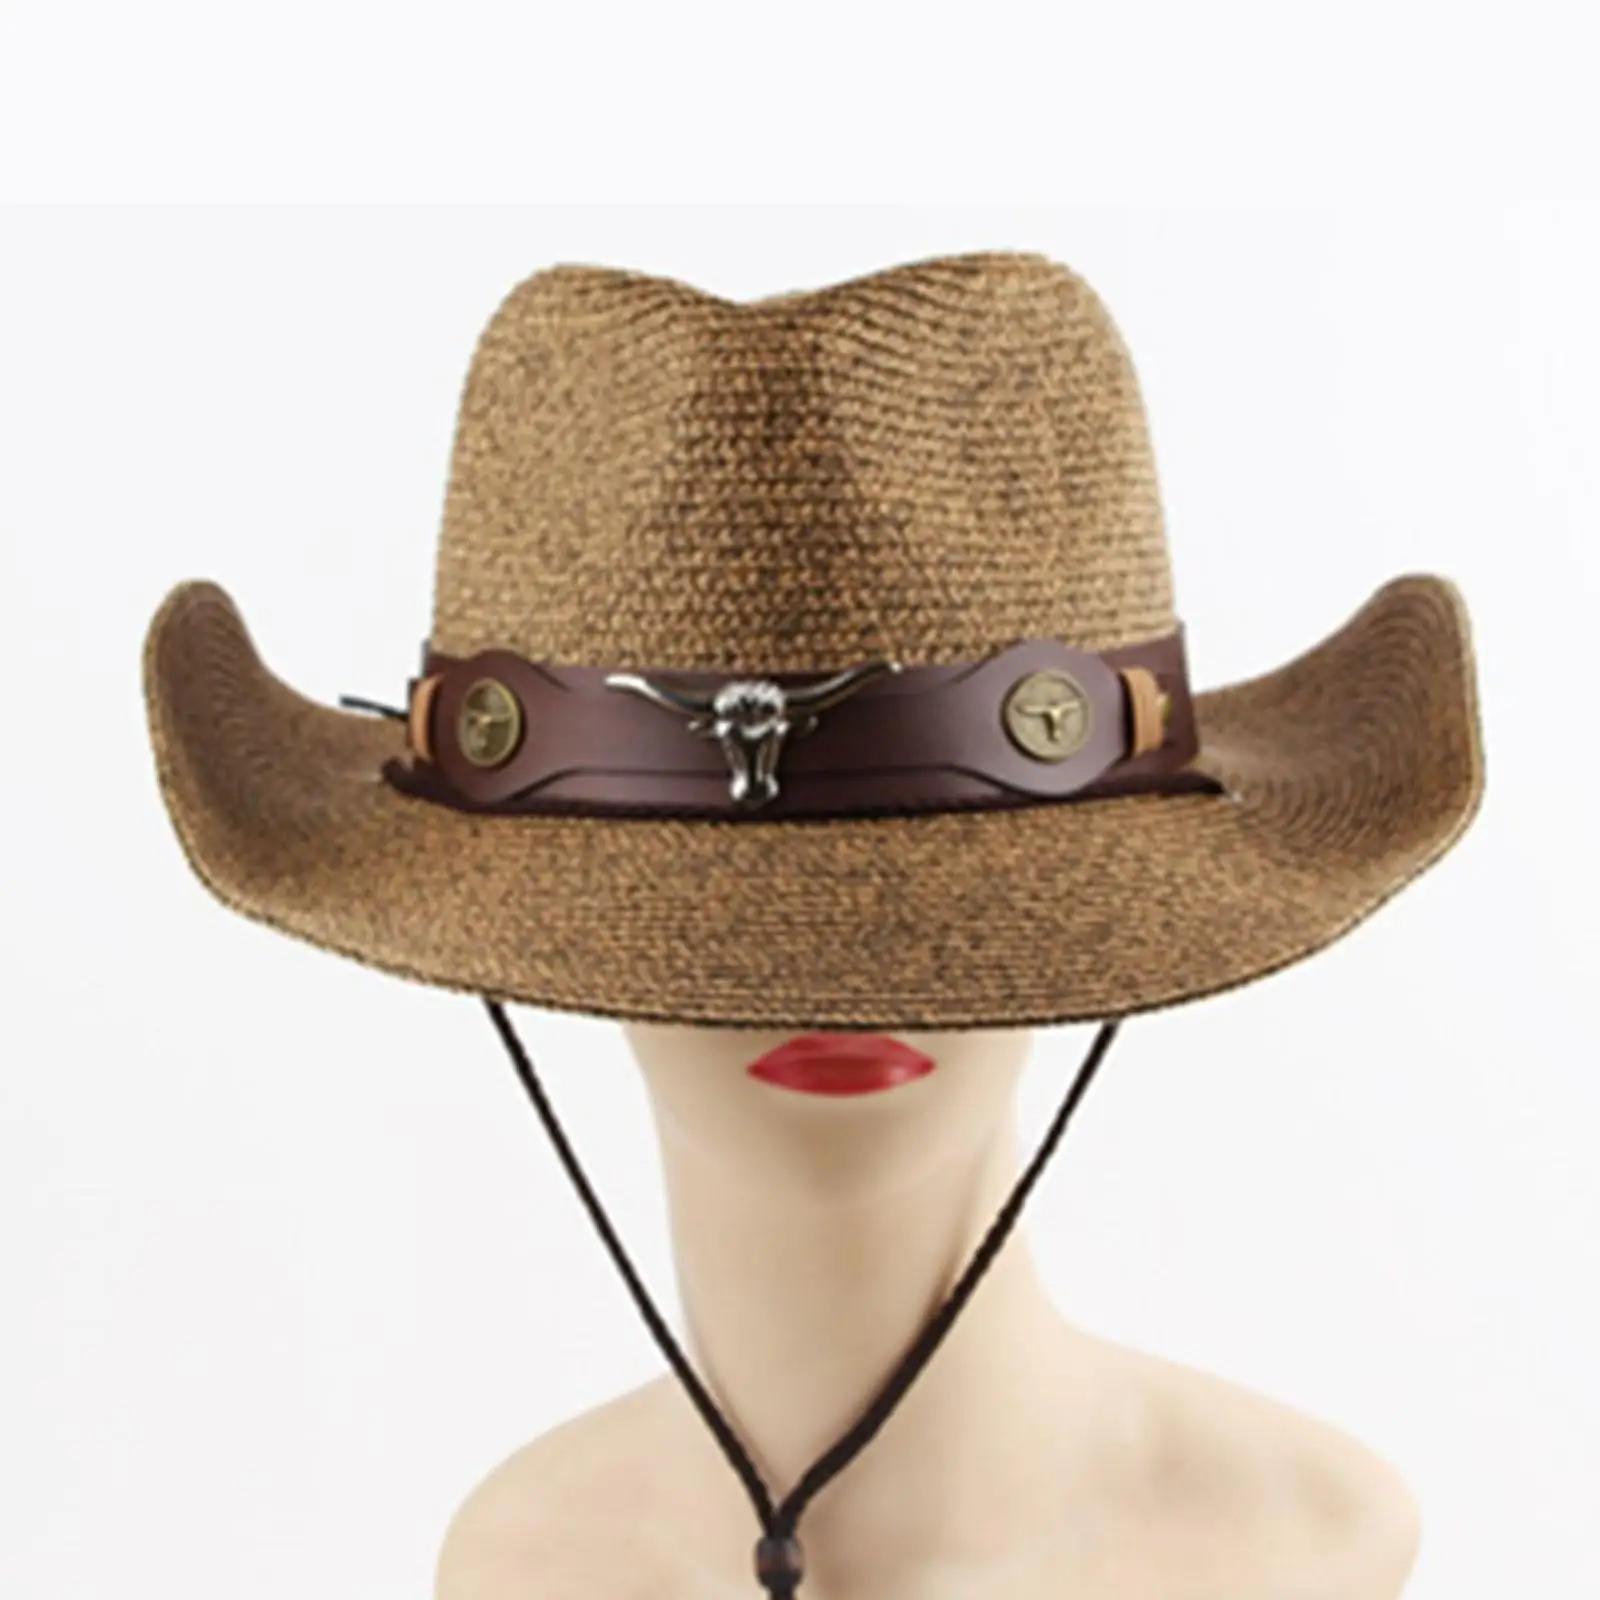 Straw Cowboy Hat Breathable Vintage Sombreros Vagueros Roll up Brim Cowboy Hat Cowboy Hats for Horseback Riding Travel Beach